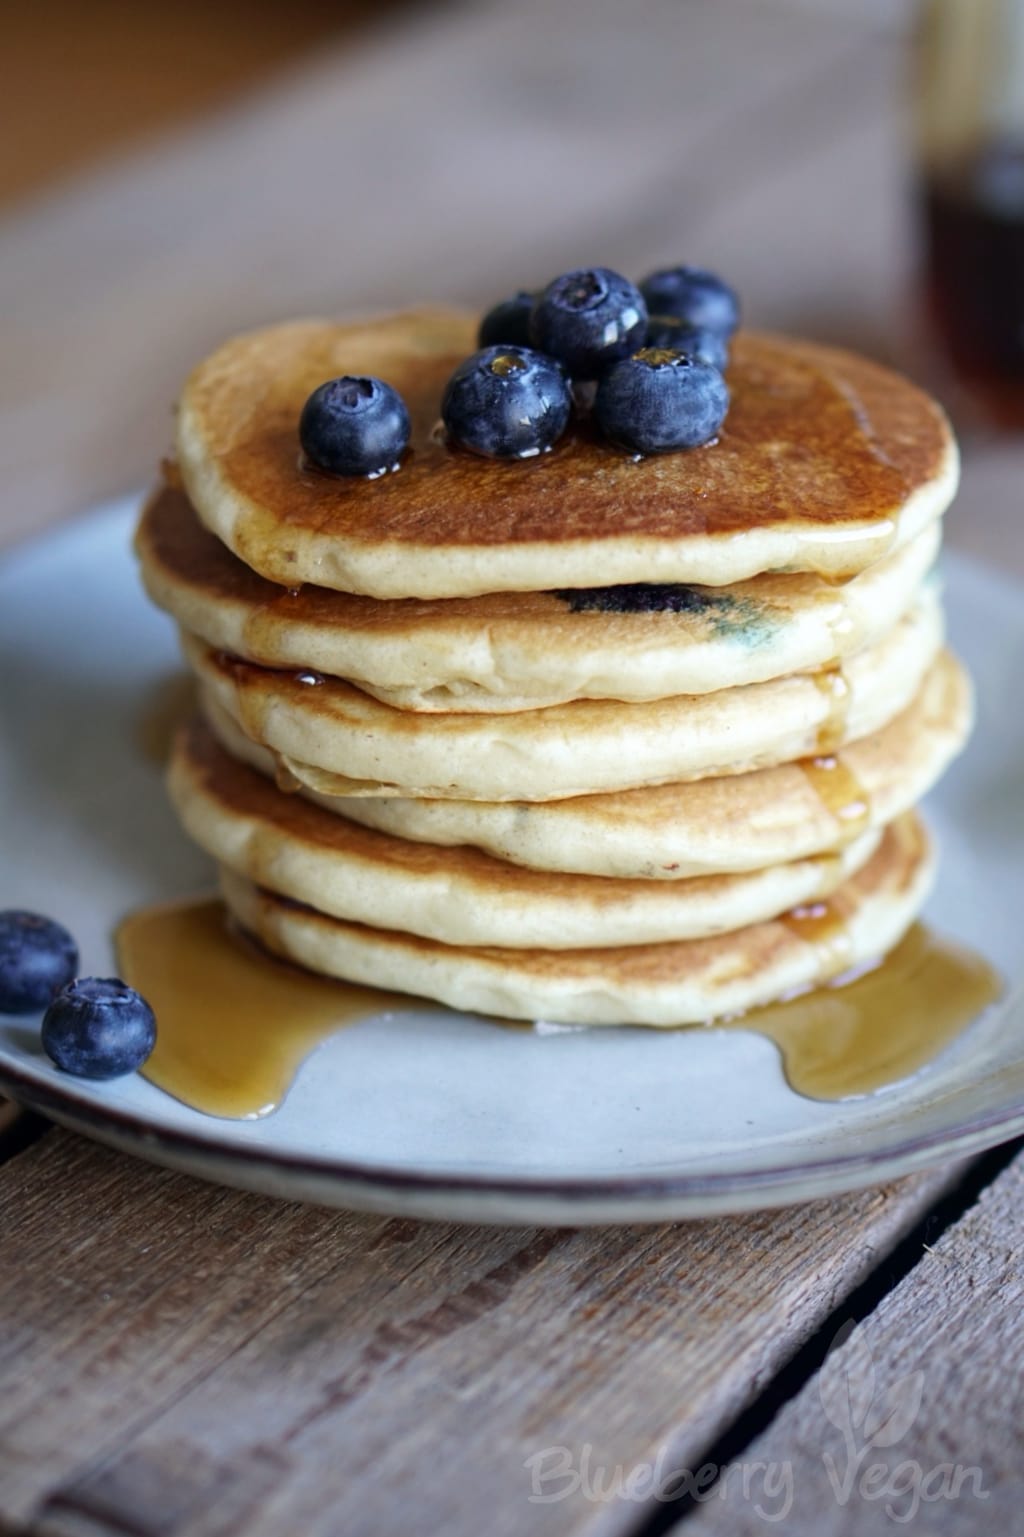 Leckere Blaubeer-Buttermilch-Pancakes - Blueberry Vegan